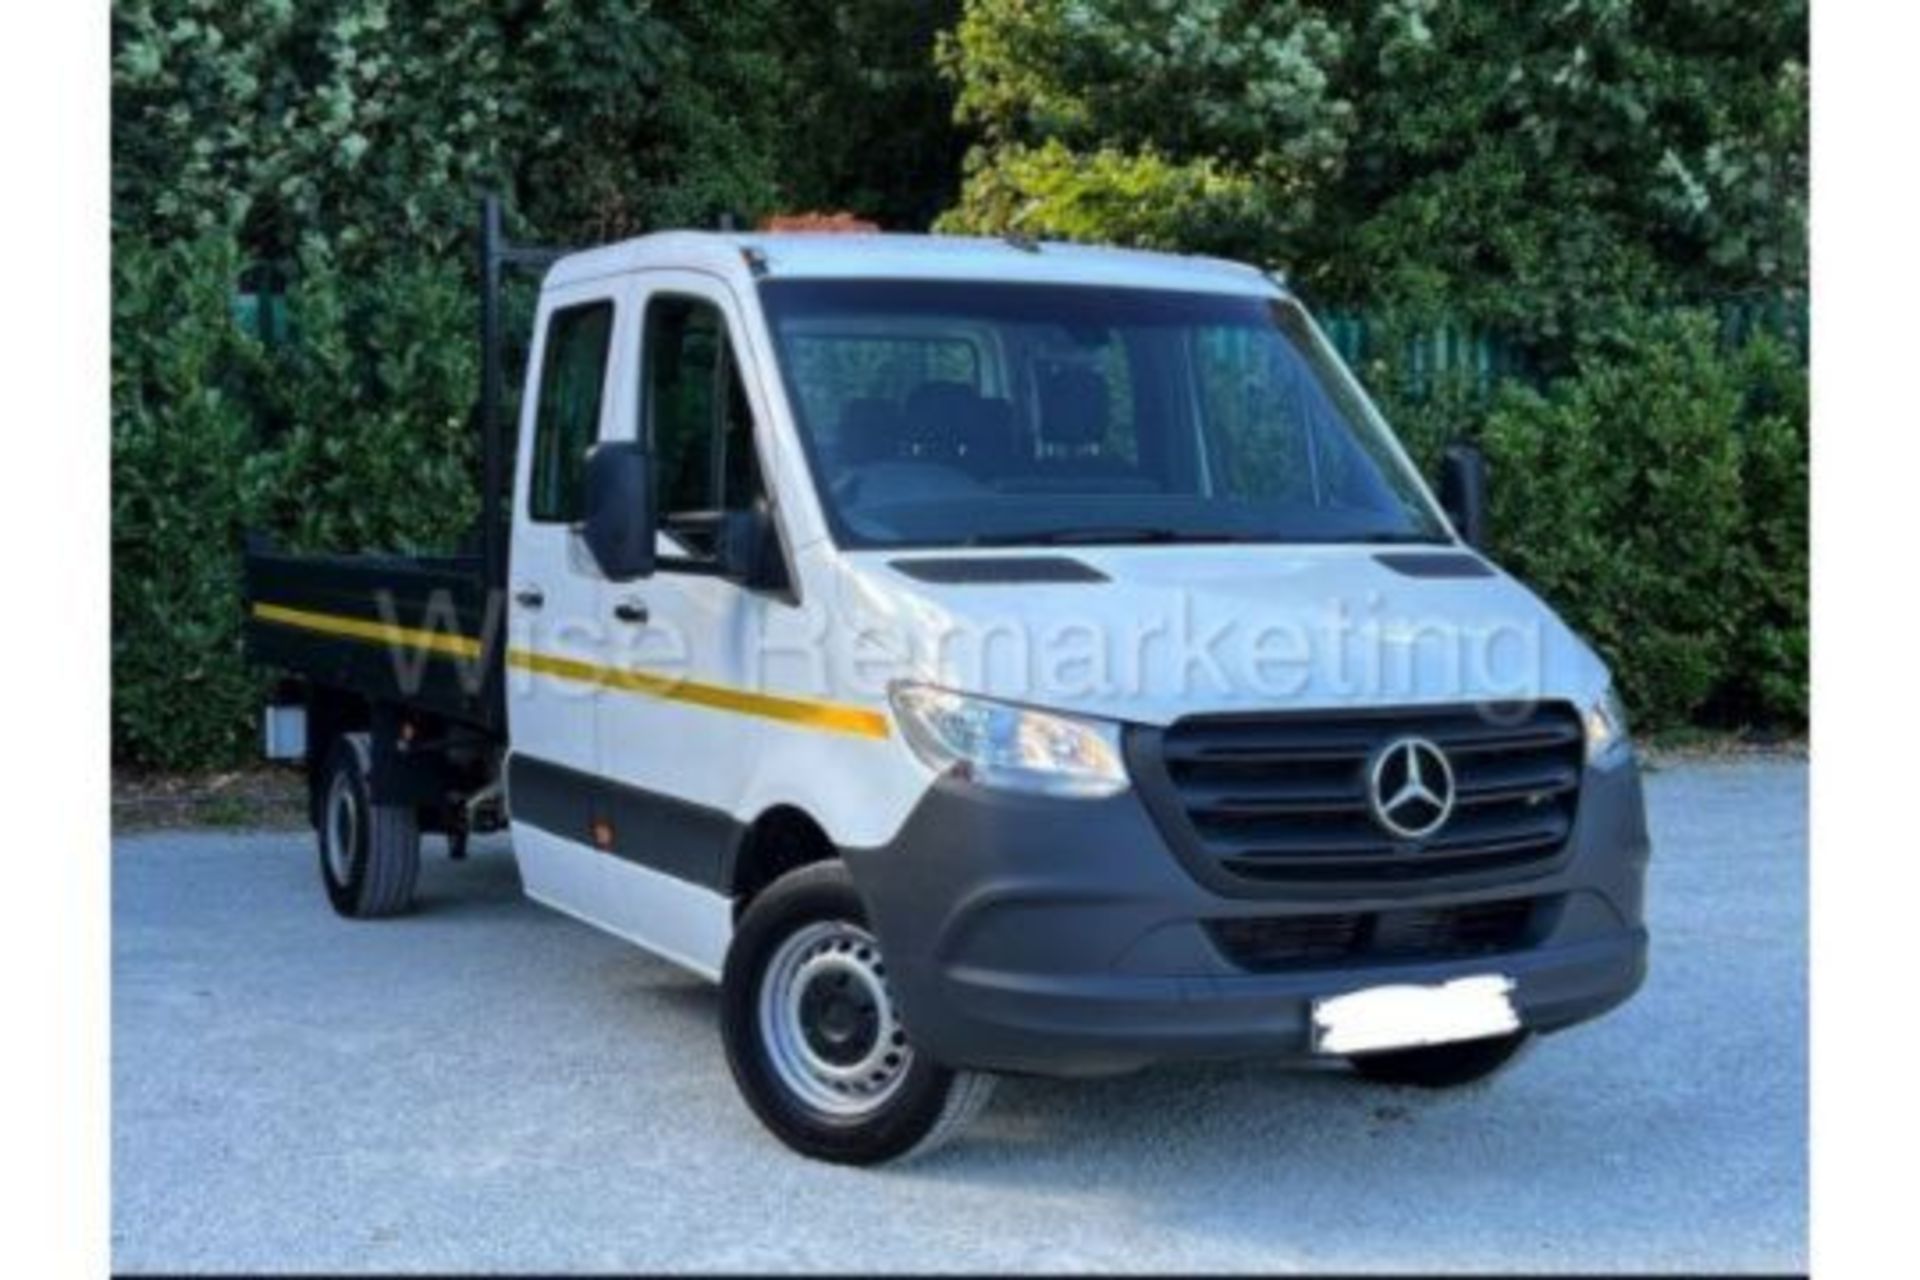 (Reserve Met) Mercedes-Benz Sprinter 314 Cdi *D/Cab Tipper Truck* (2019 New Model) *LOW MILEAGE* - Image 5 of 11